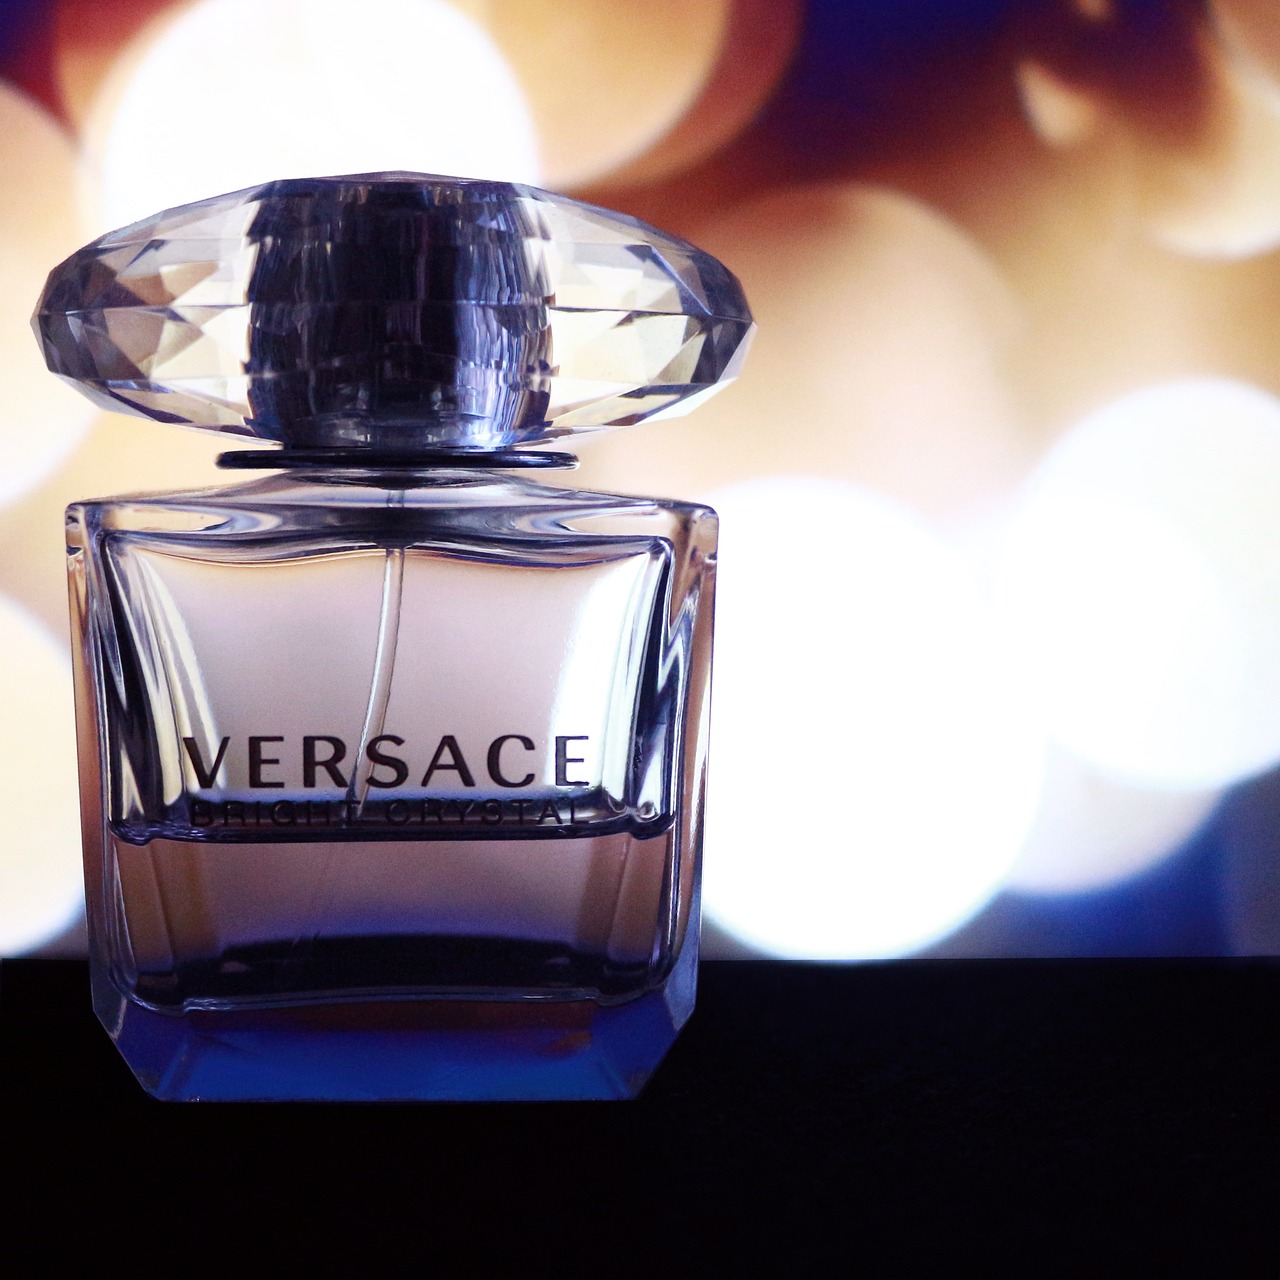 versace perfume product free photo